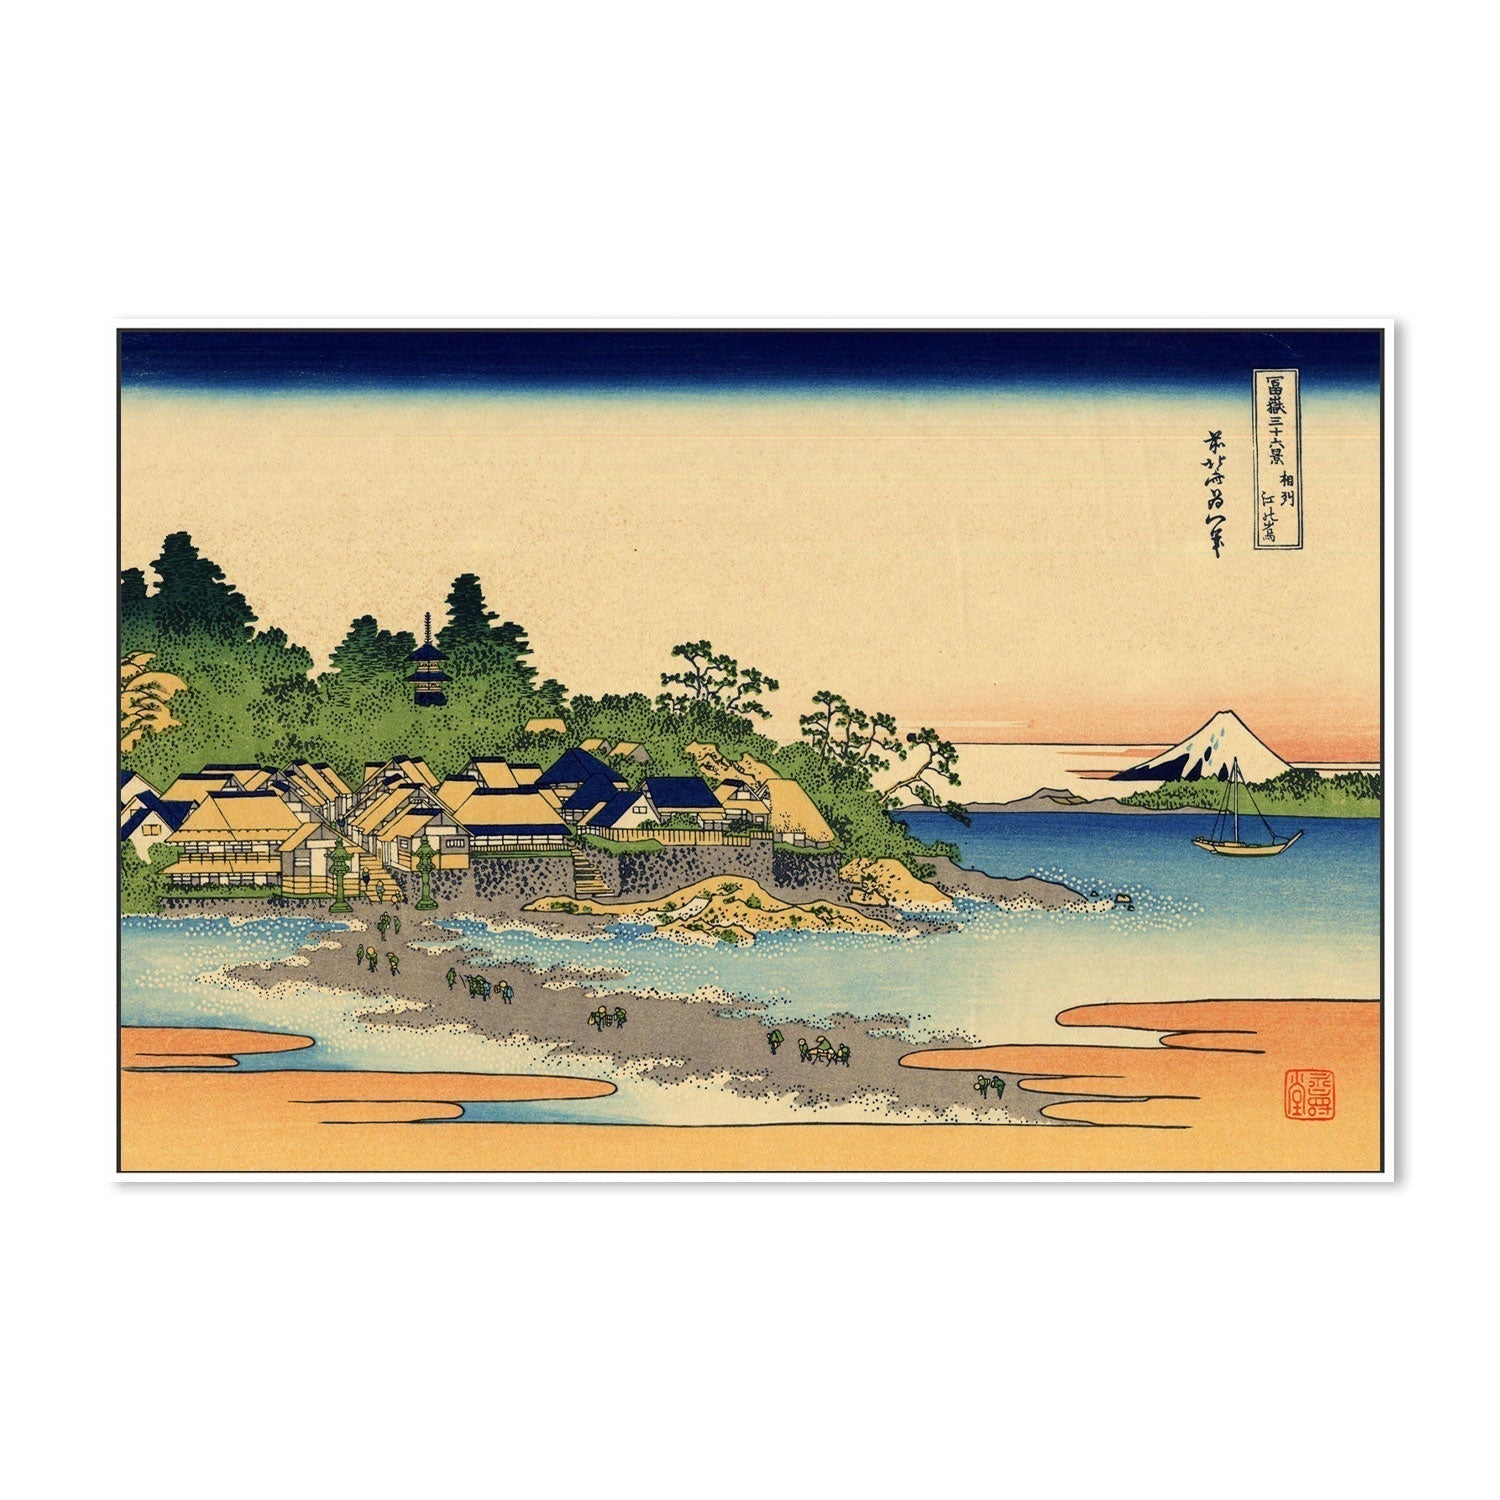 wall-art-print-canvas-poster-framed-Enoshima in the Sagami province, Style A-by-Katsushika Hokusai-Gioia Wall Art